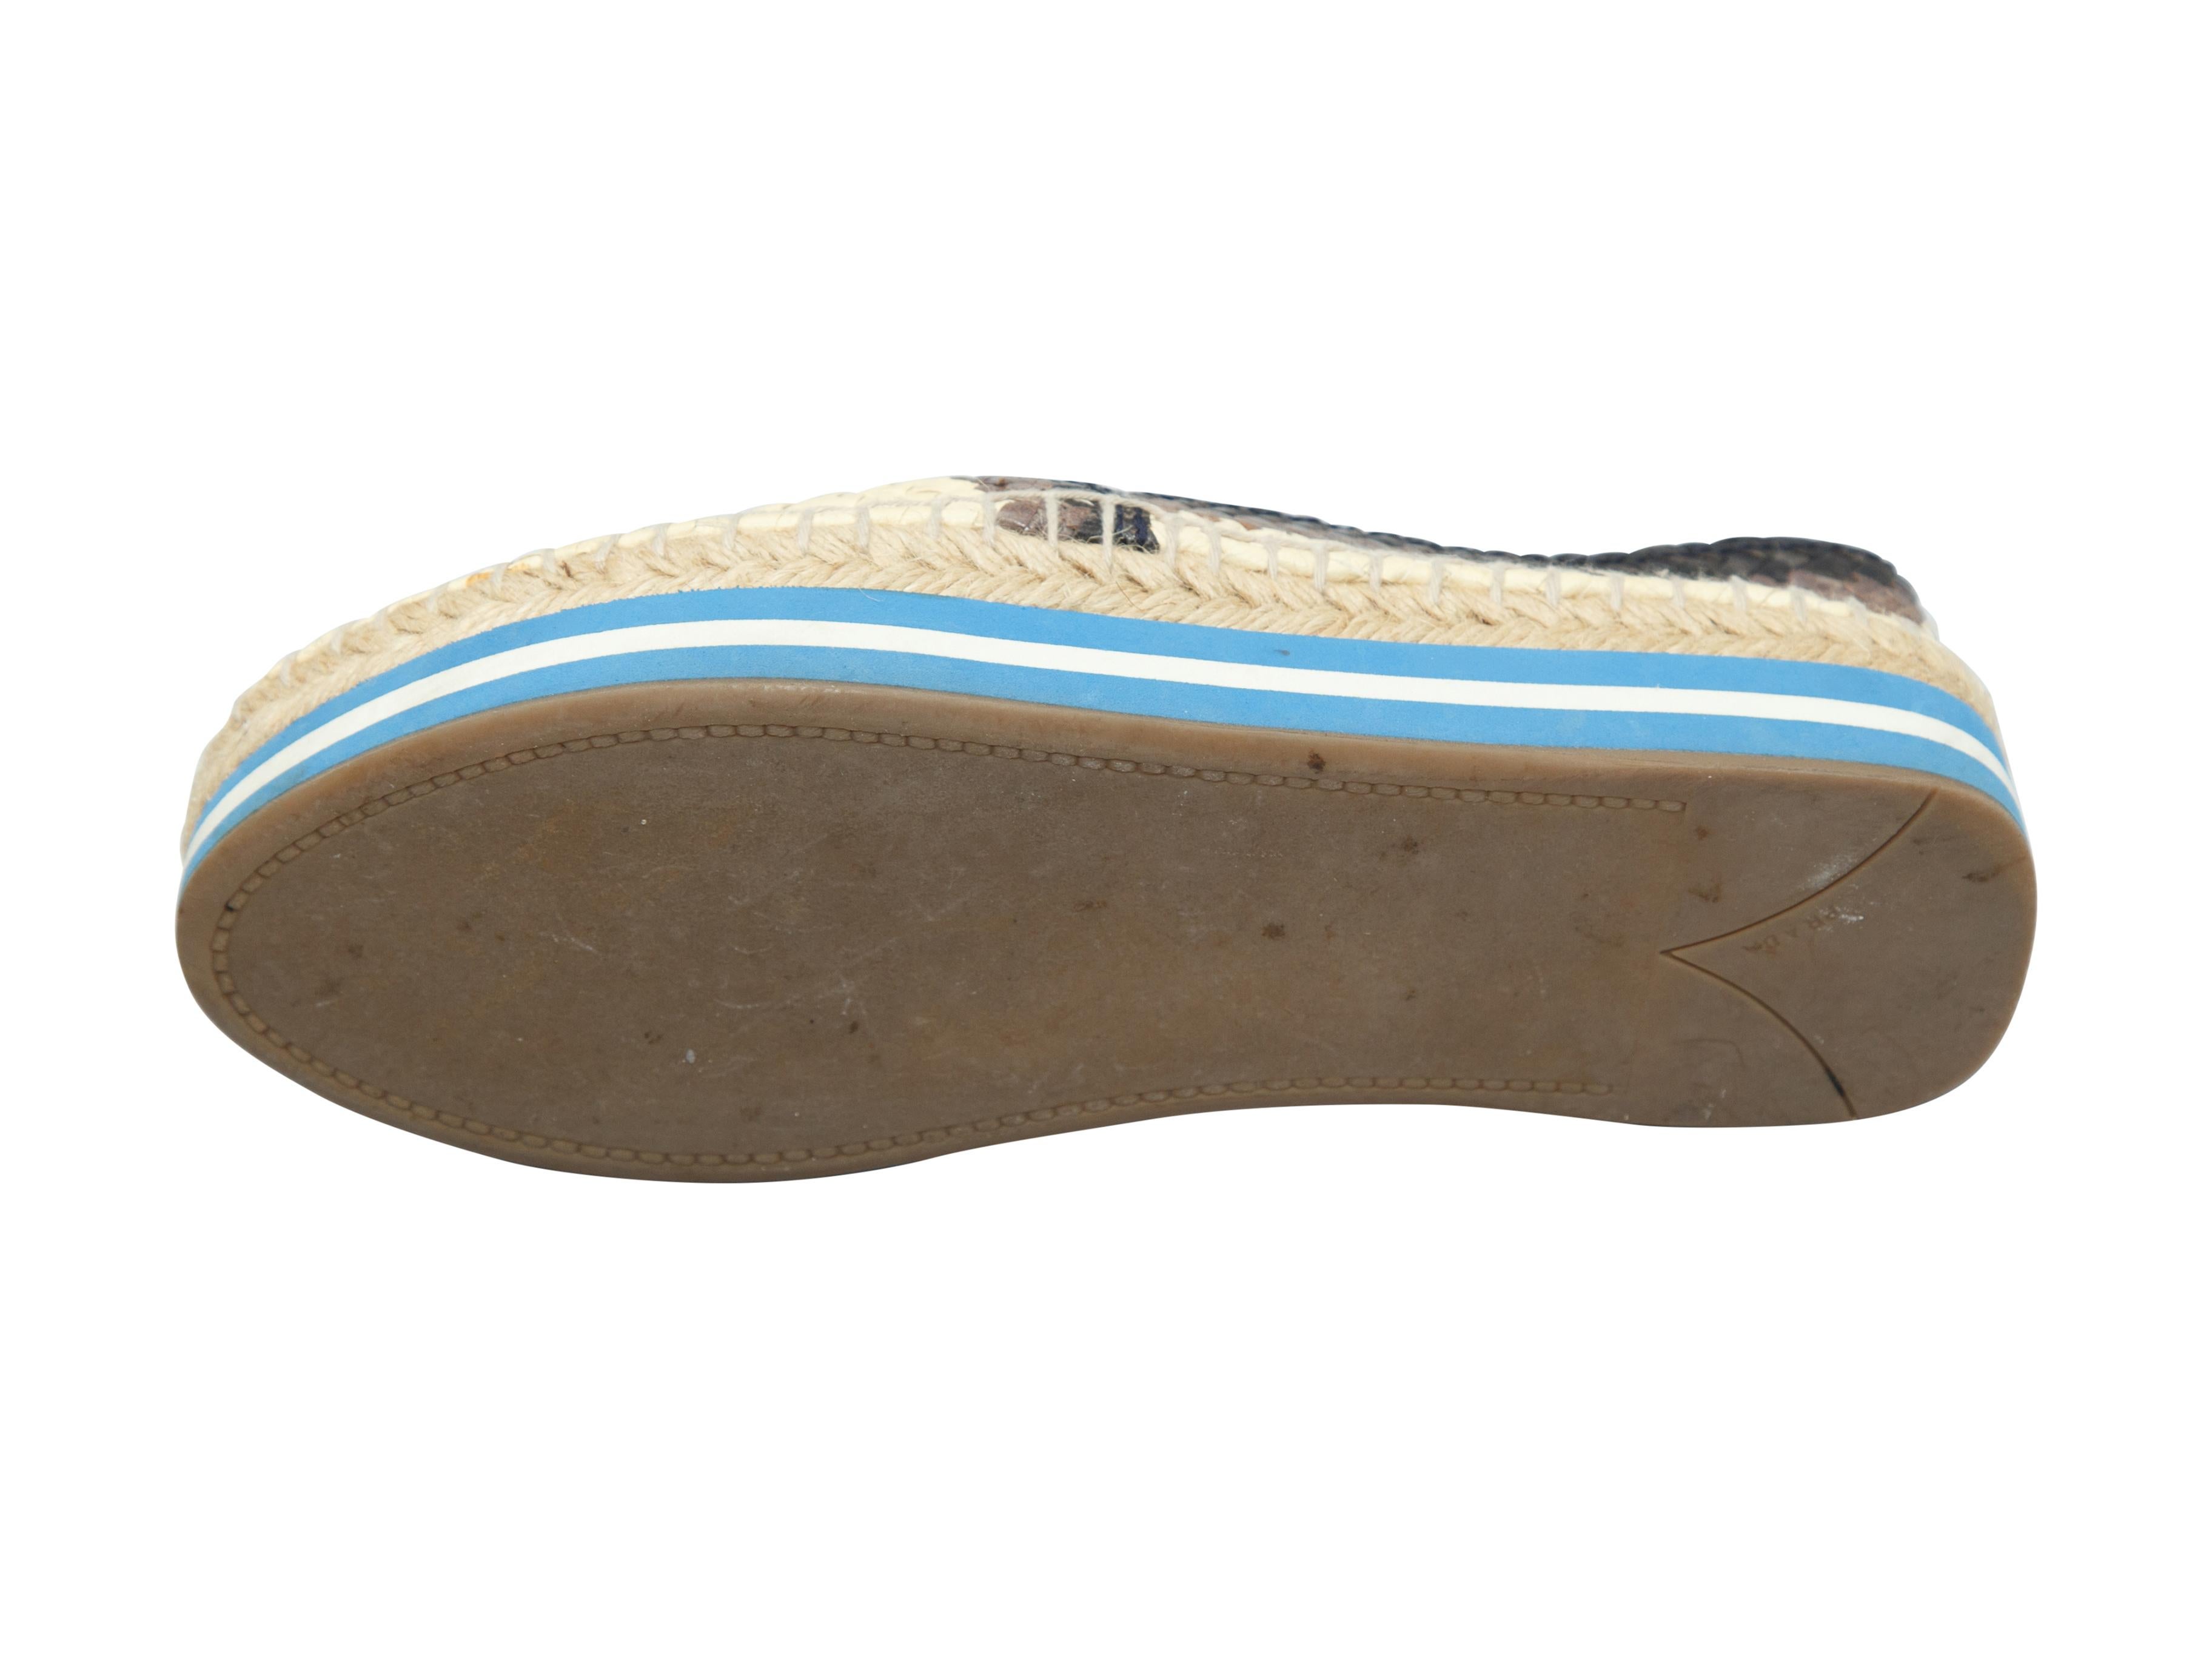 Product details: Beige and multicolor woven raffia espadrilles by Prada. Flatform soles. Designer size 35.5. 1.13